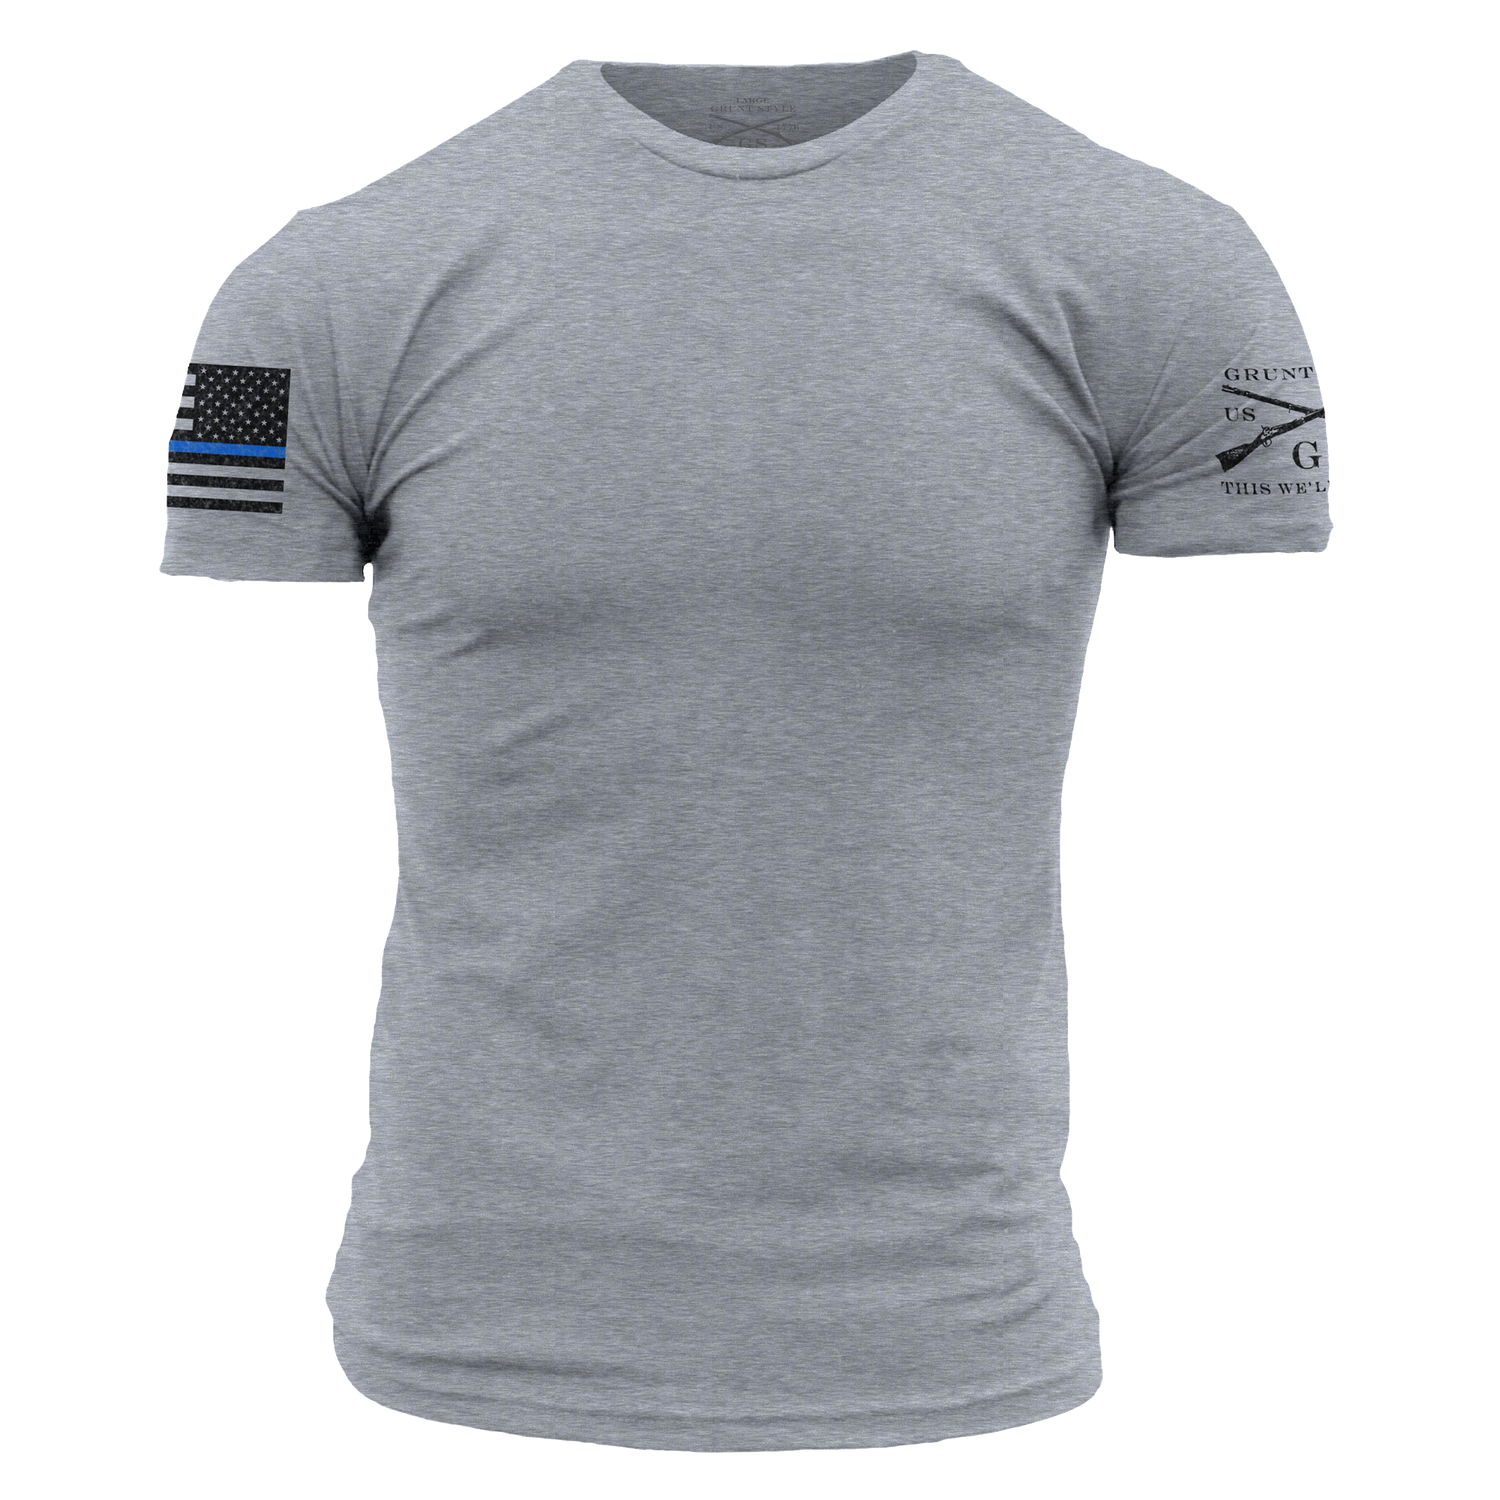 police shirts - t-shirt bundle 